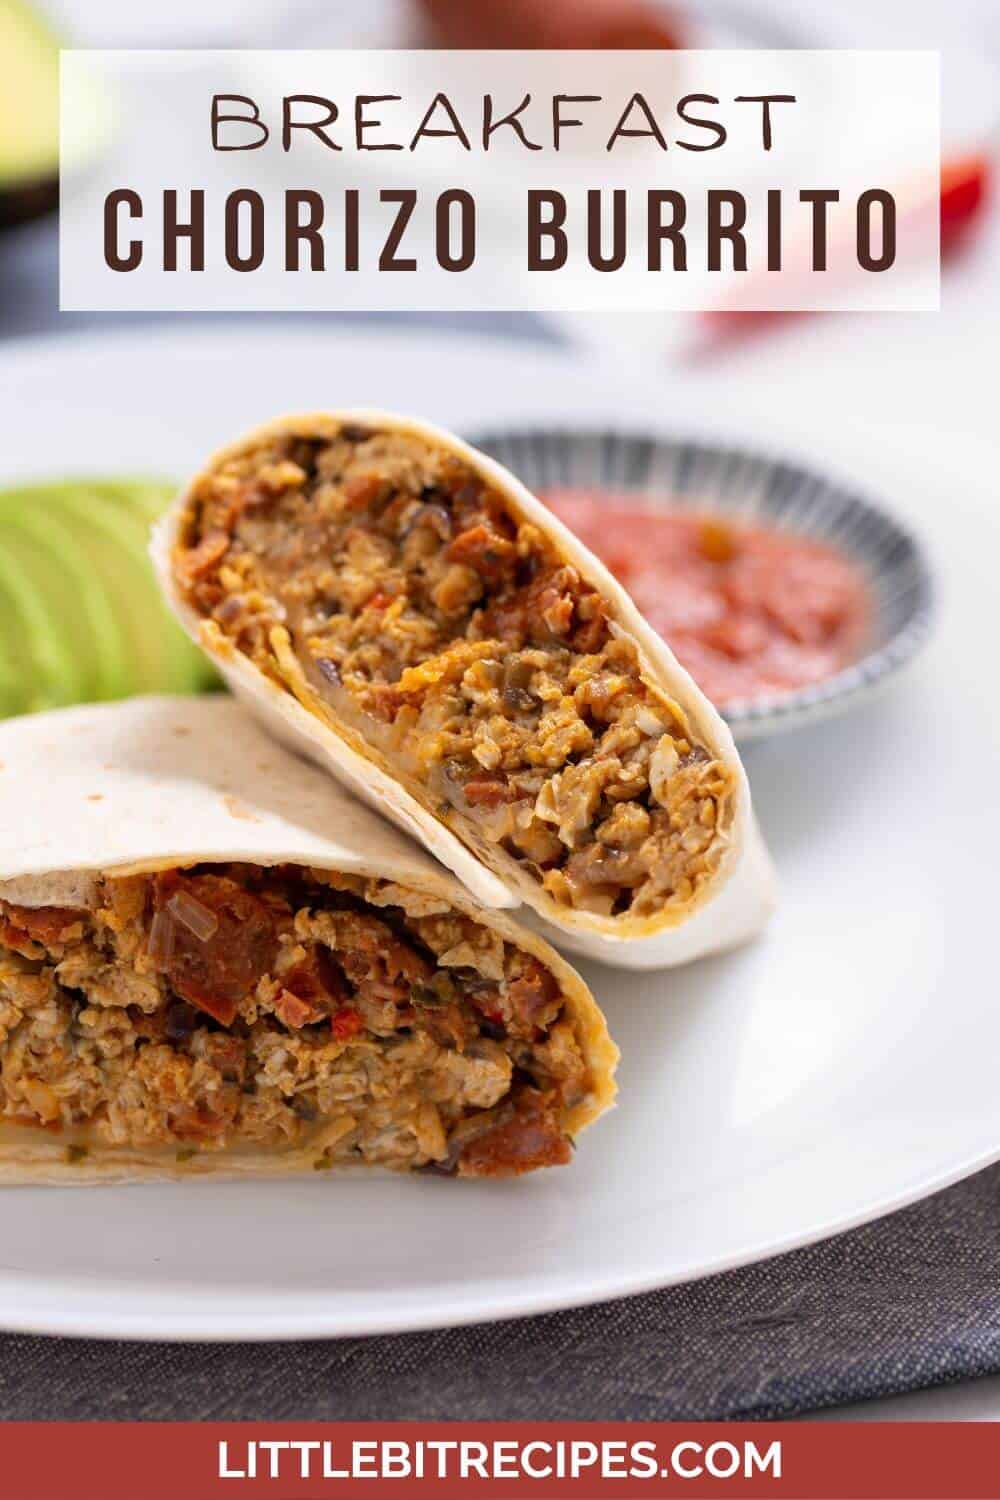 Breakfast chorizo burrito with text.